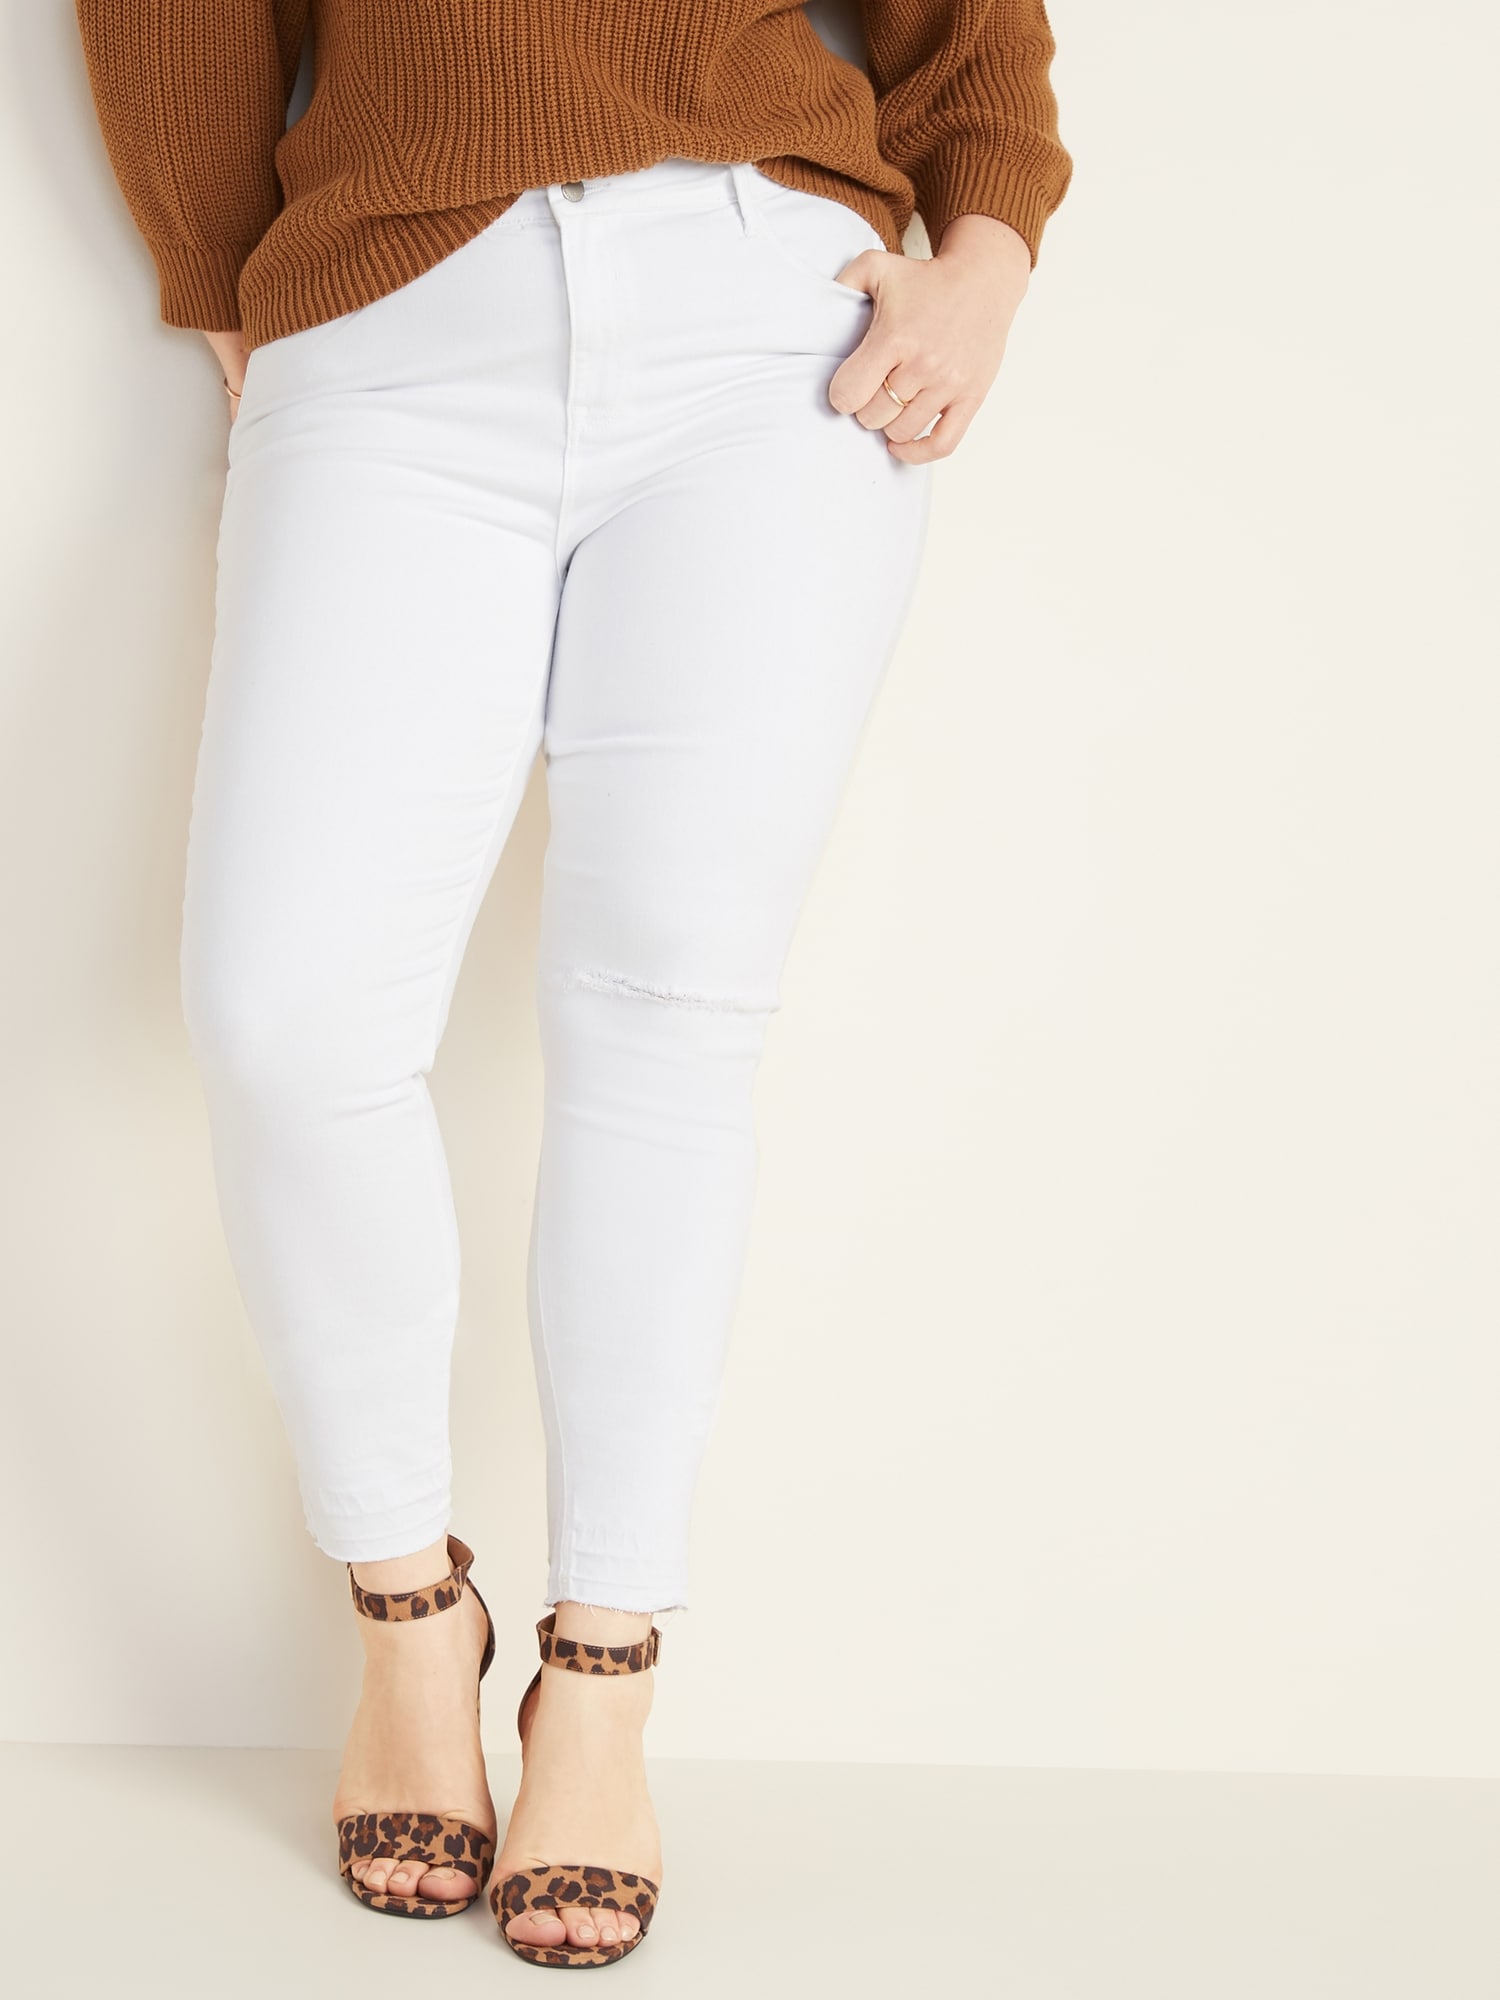 old navy white skinny jeans